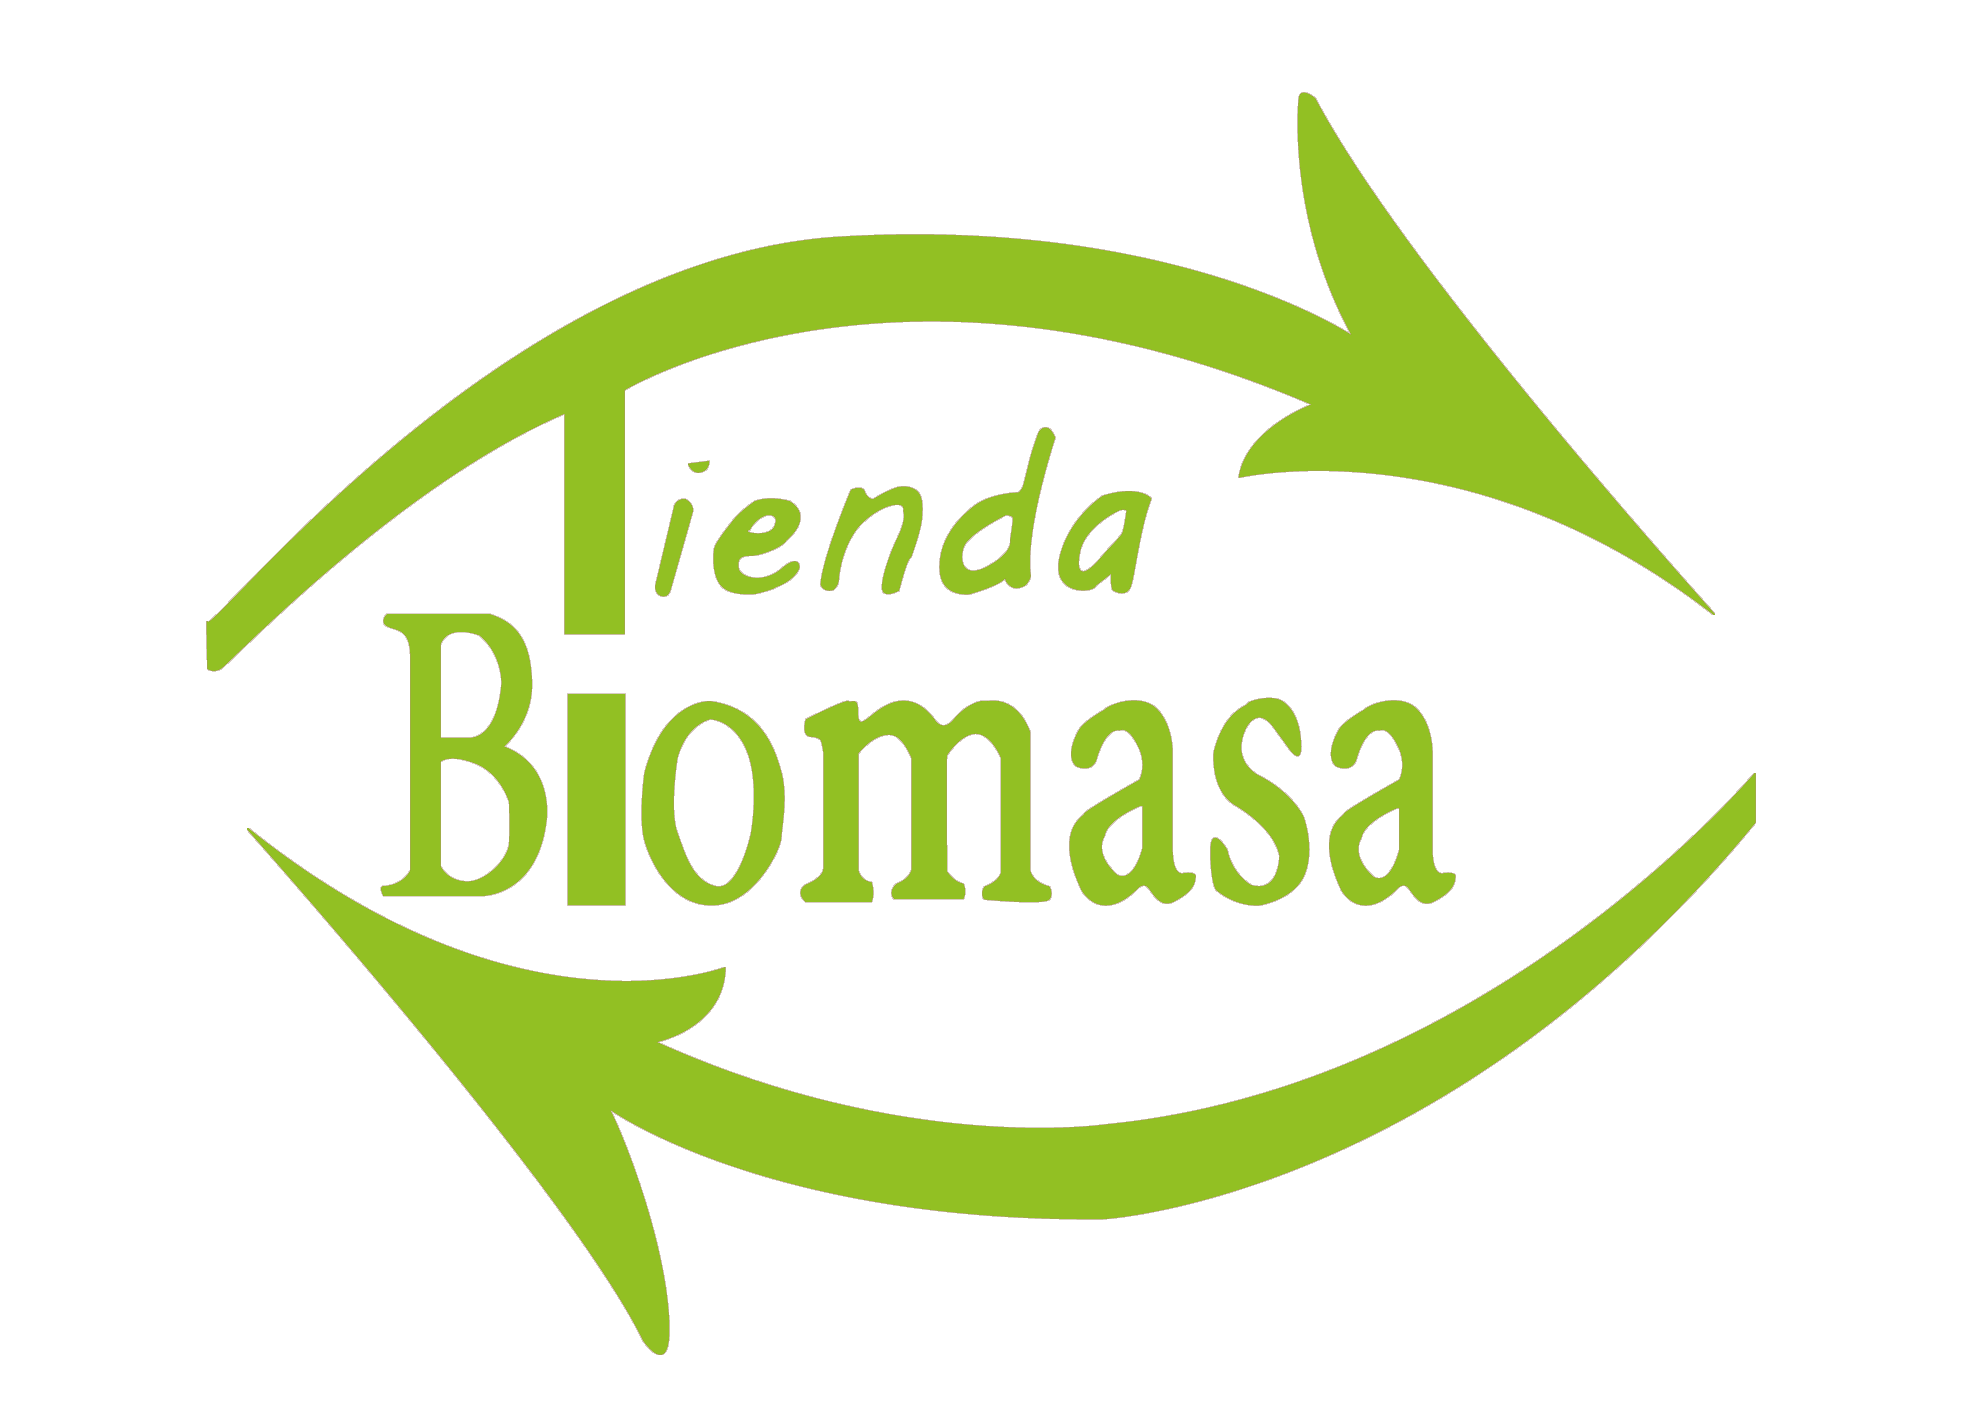 Tienda Biomasa